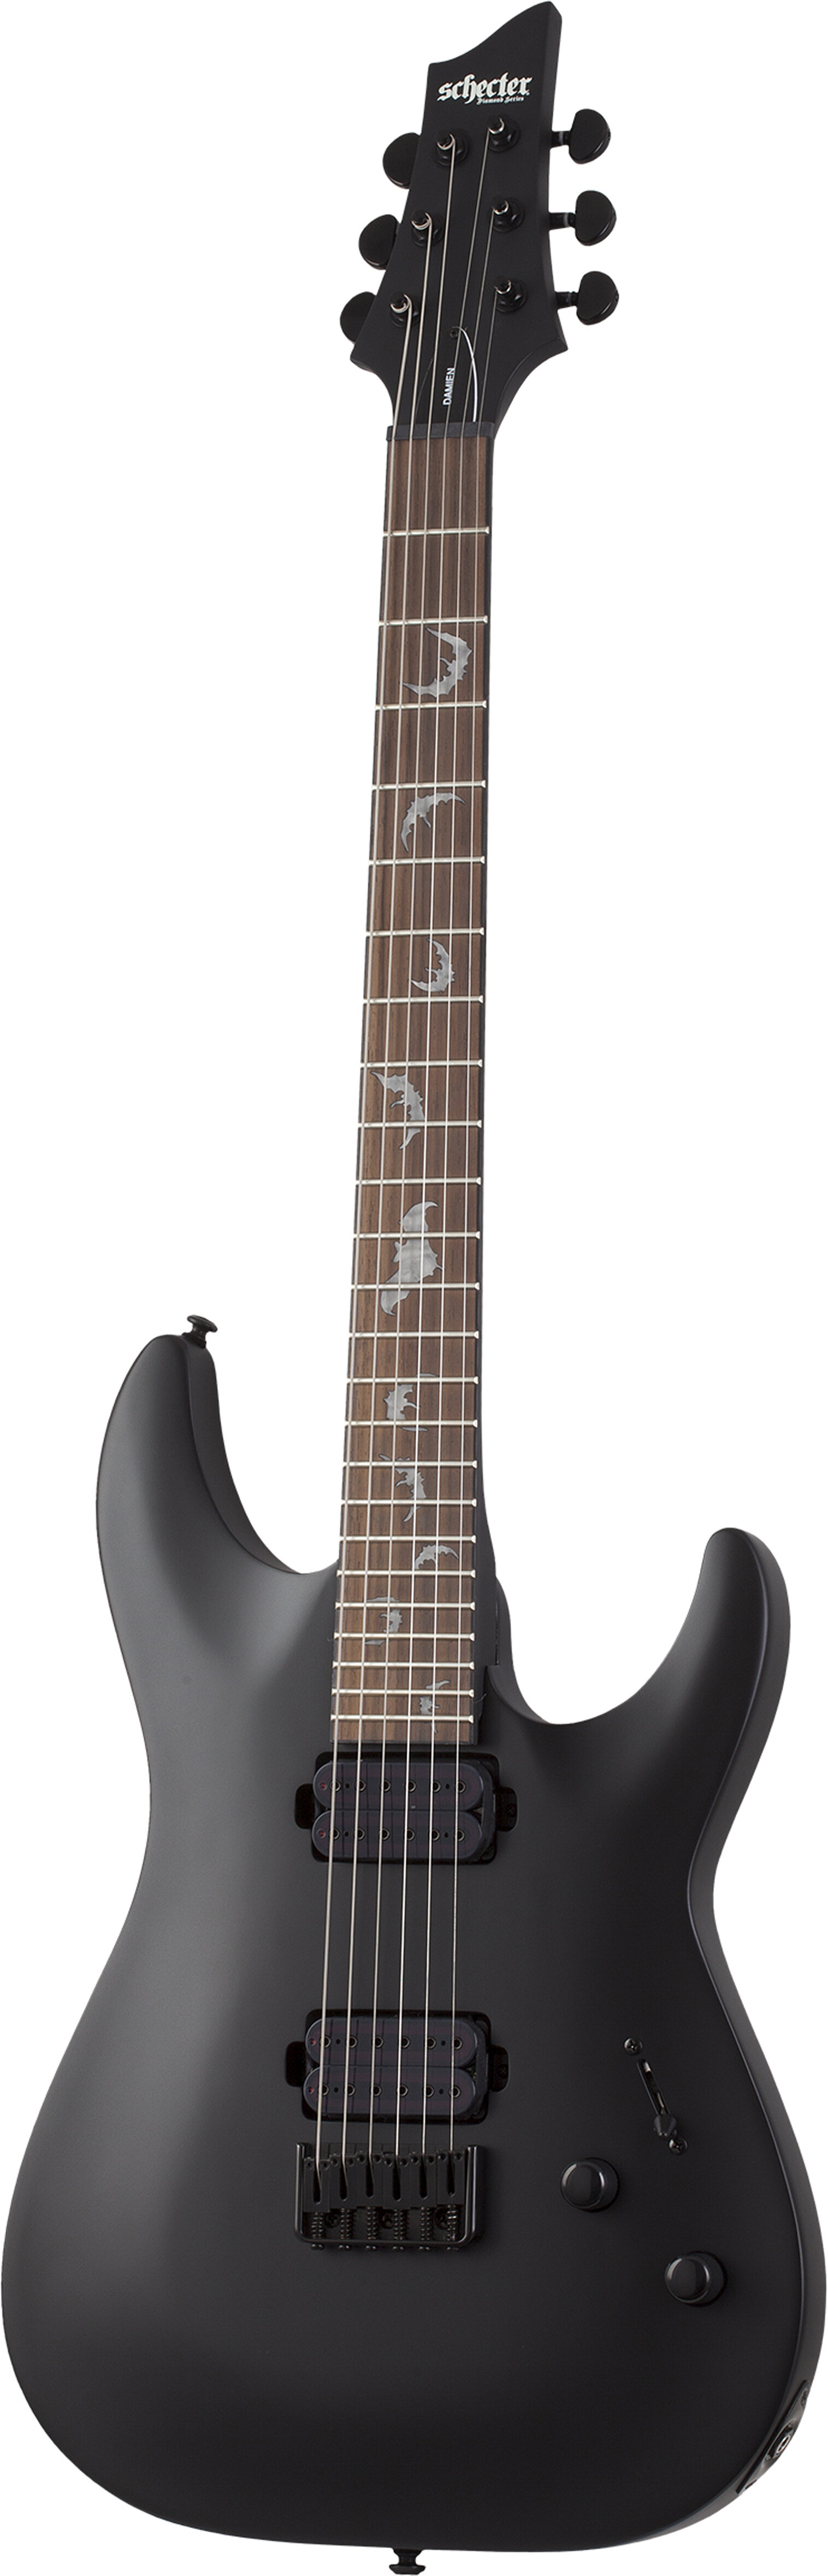 Schecter Damien-6 Electric Guitar Satin Black -  2470